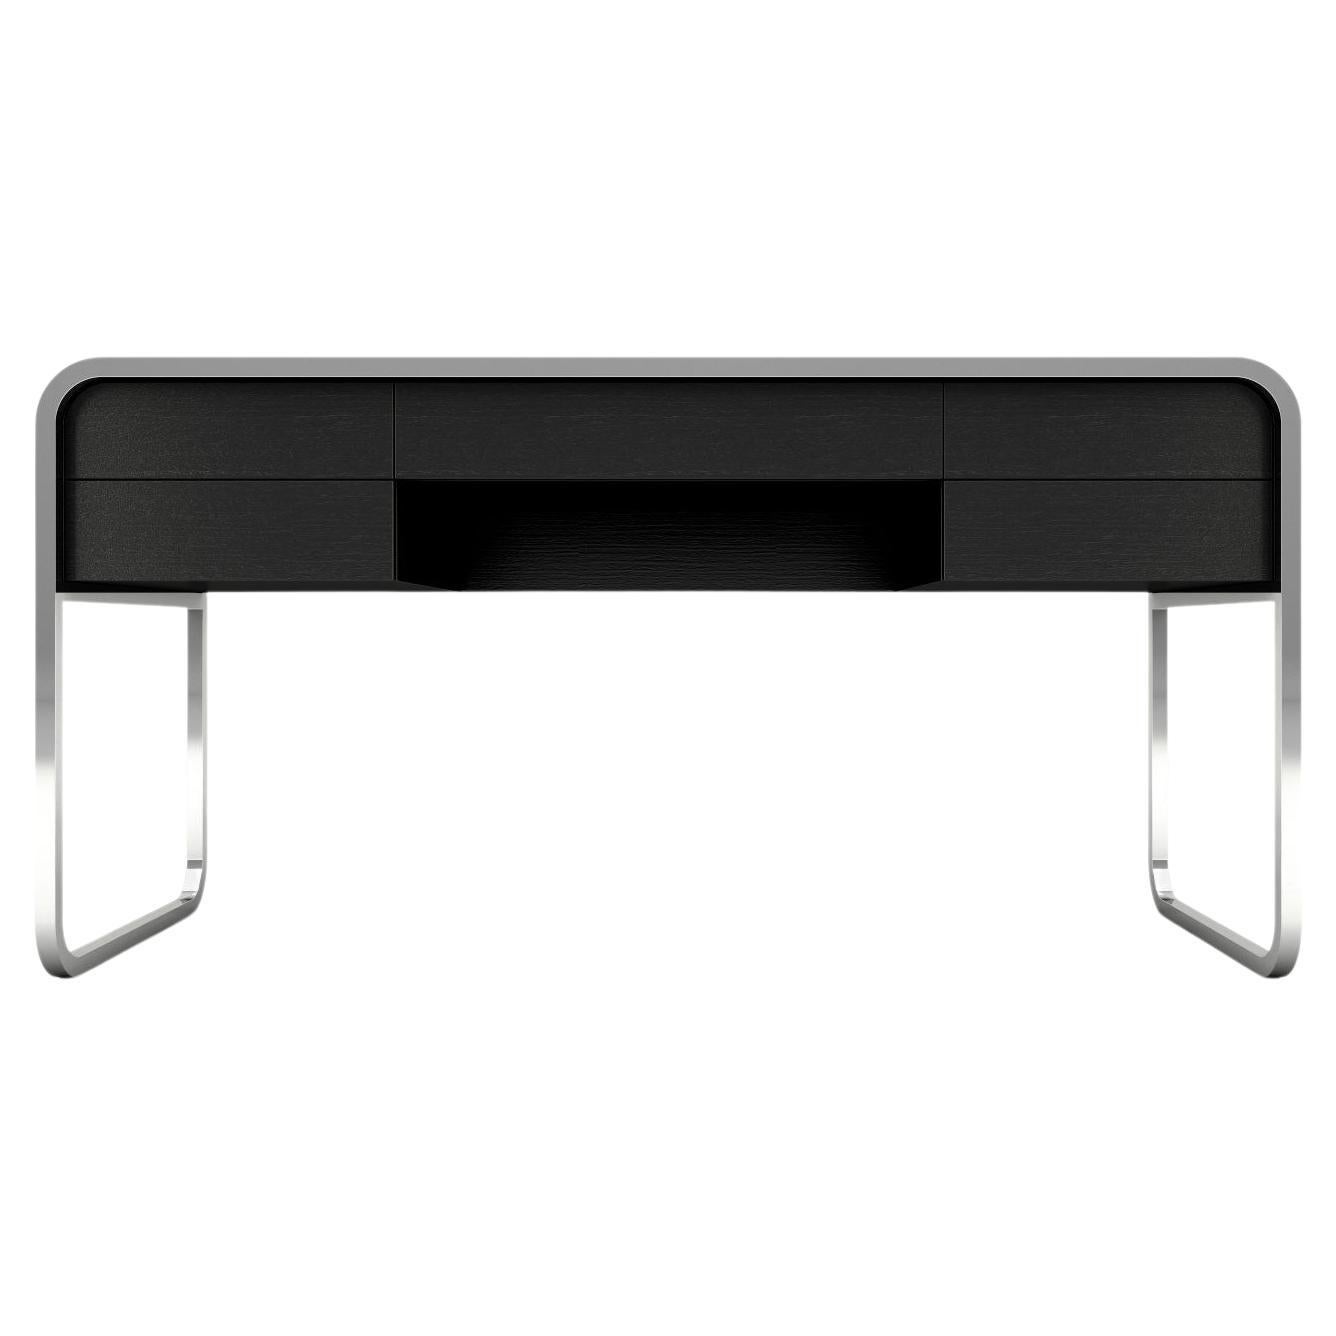 Midnight Desk - Bureau moderne laqué noir avec pieds en acier inoxydable